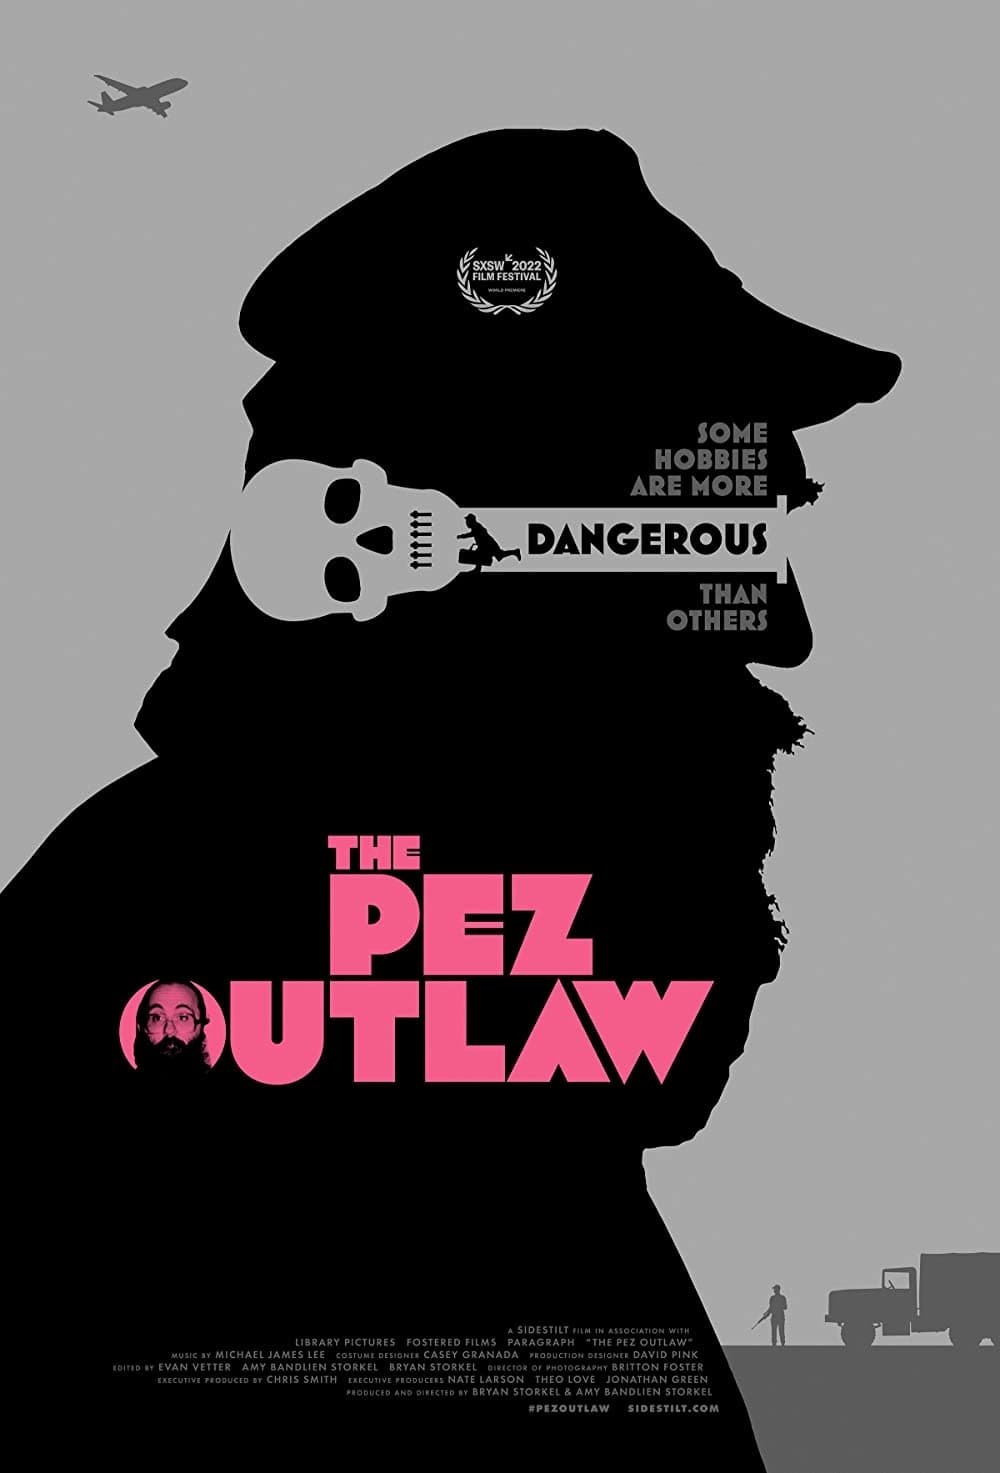 The Pez Outlaw.jpg